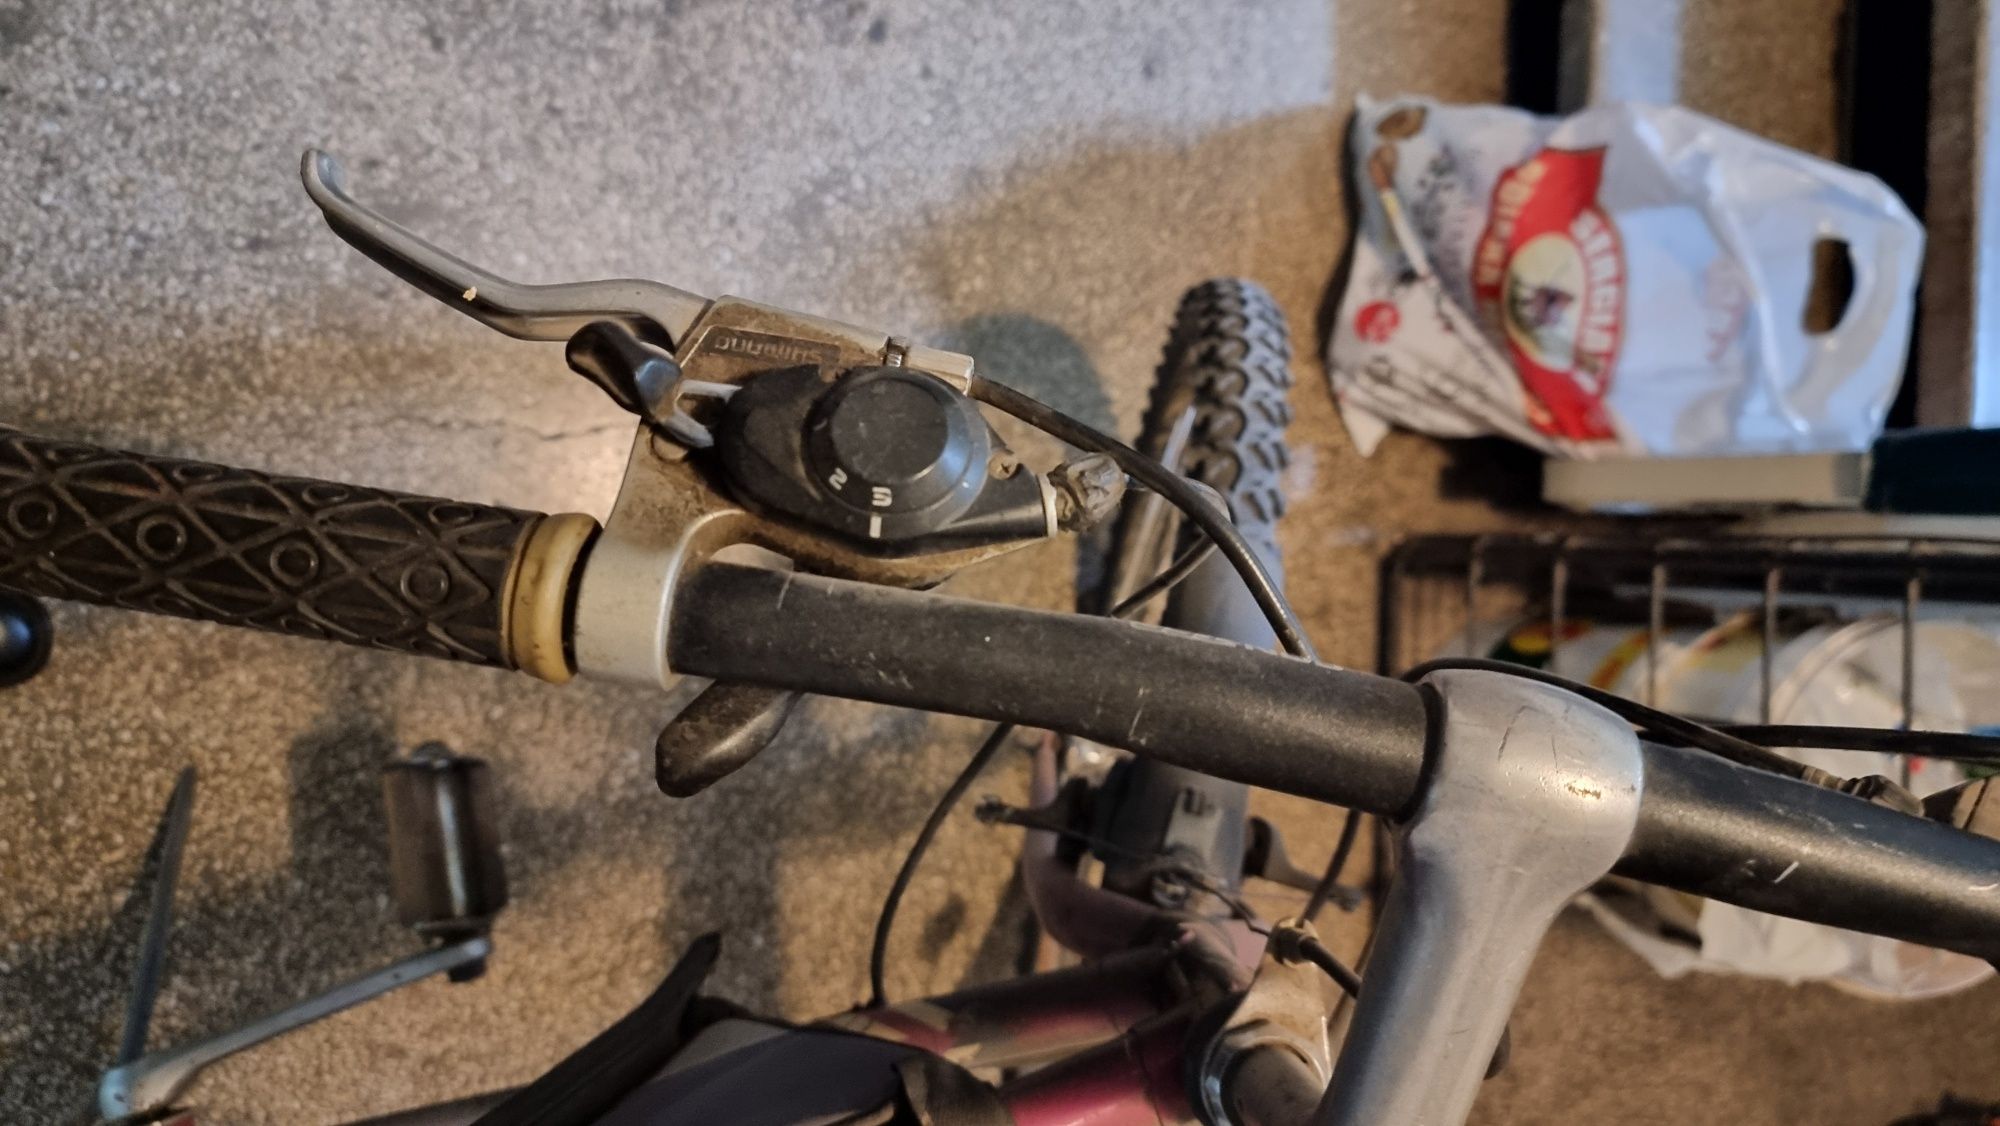 Bicicleta Shimano 230 roni in conditii bune Are totul schimbat pe ea